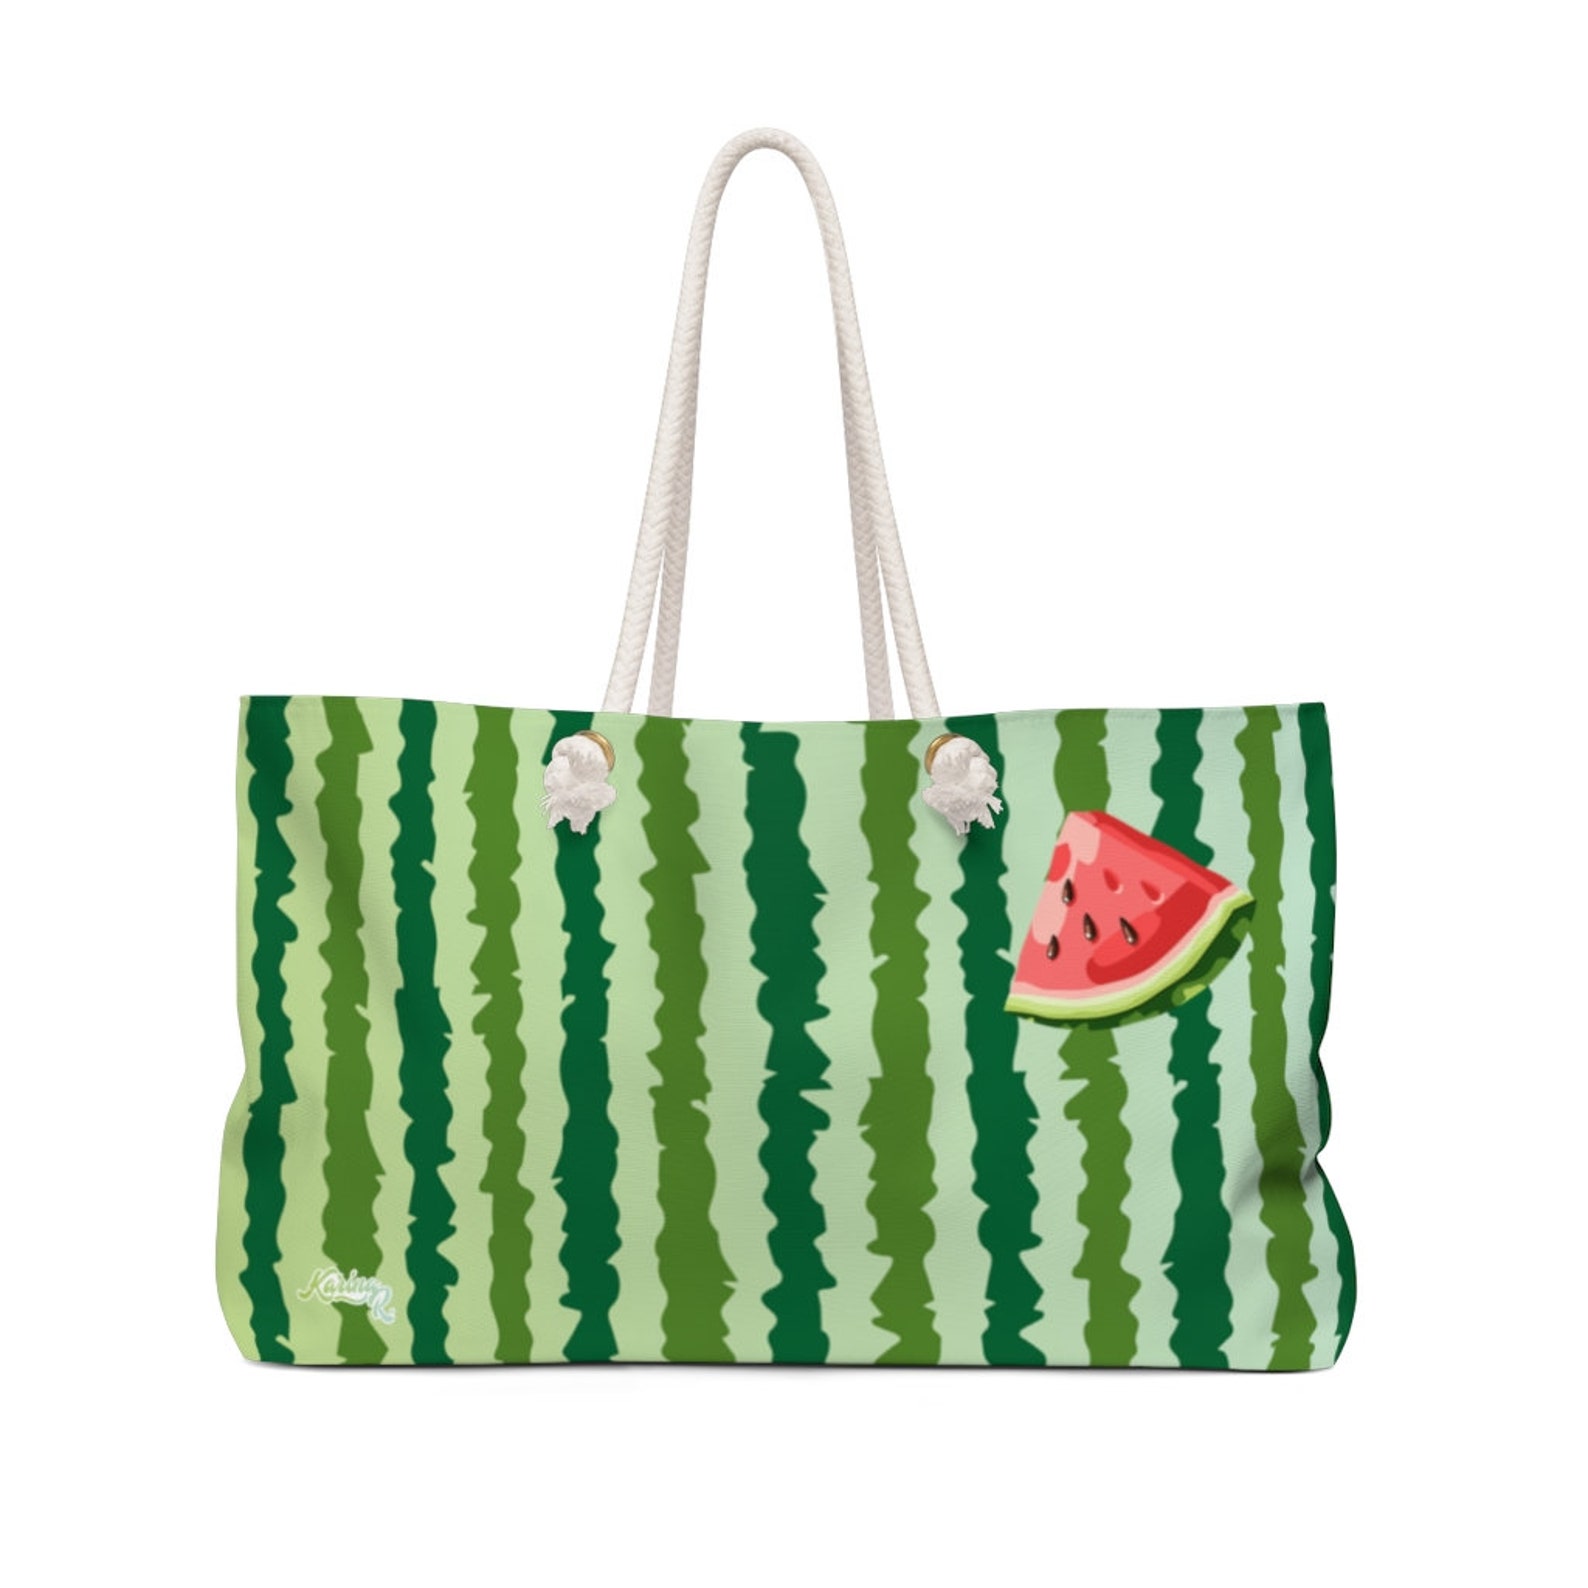 Watermelon Sandía Weekender Bag DOUBLE-SIDED PRINT - Etsy